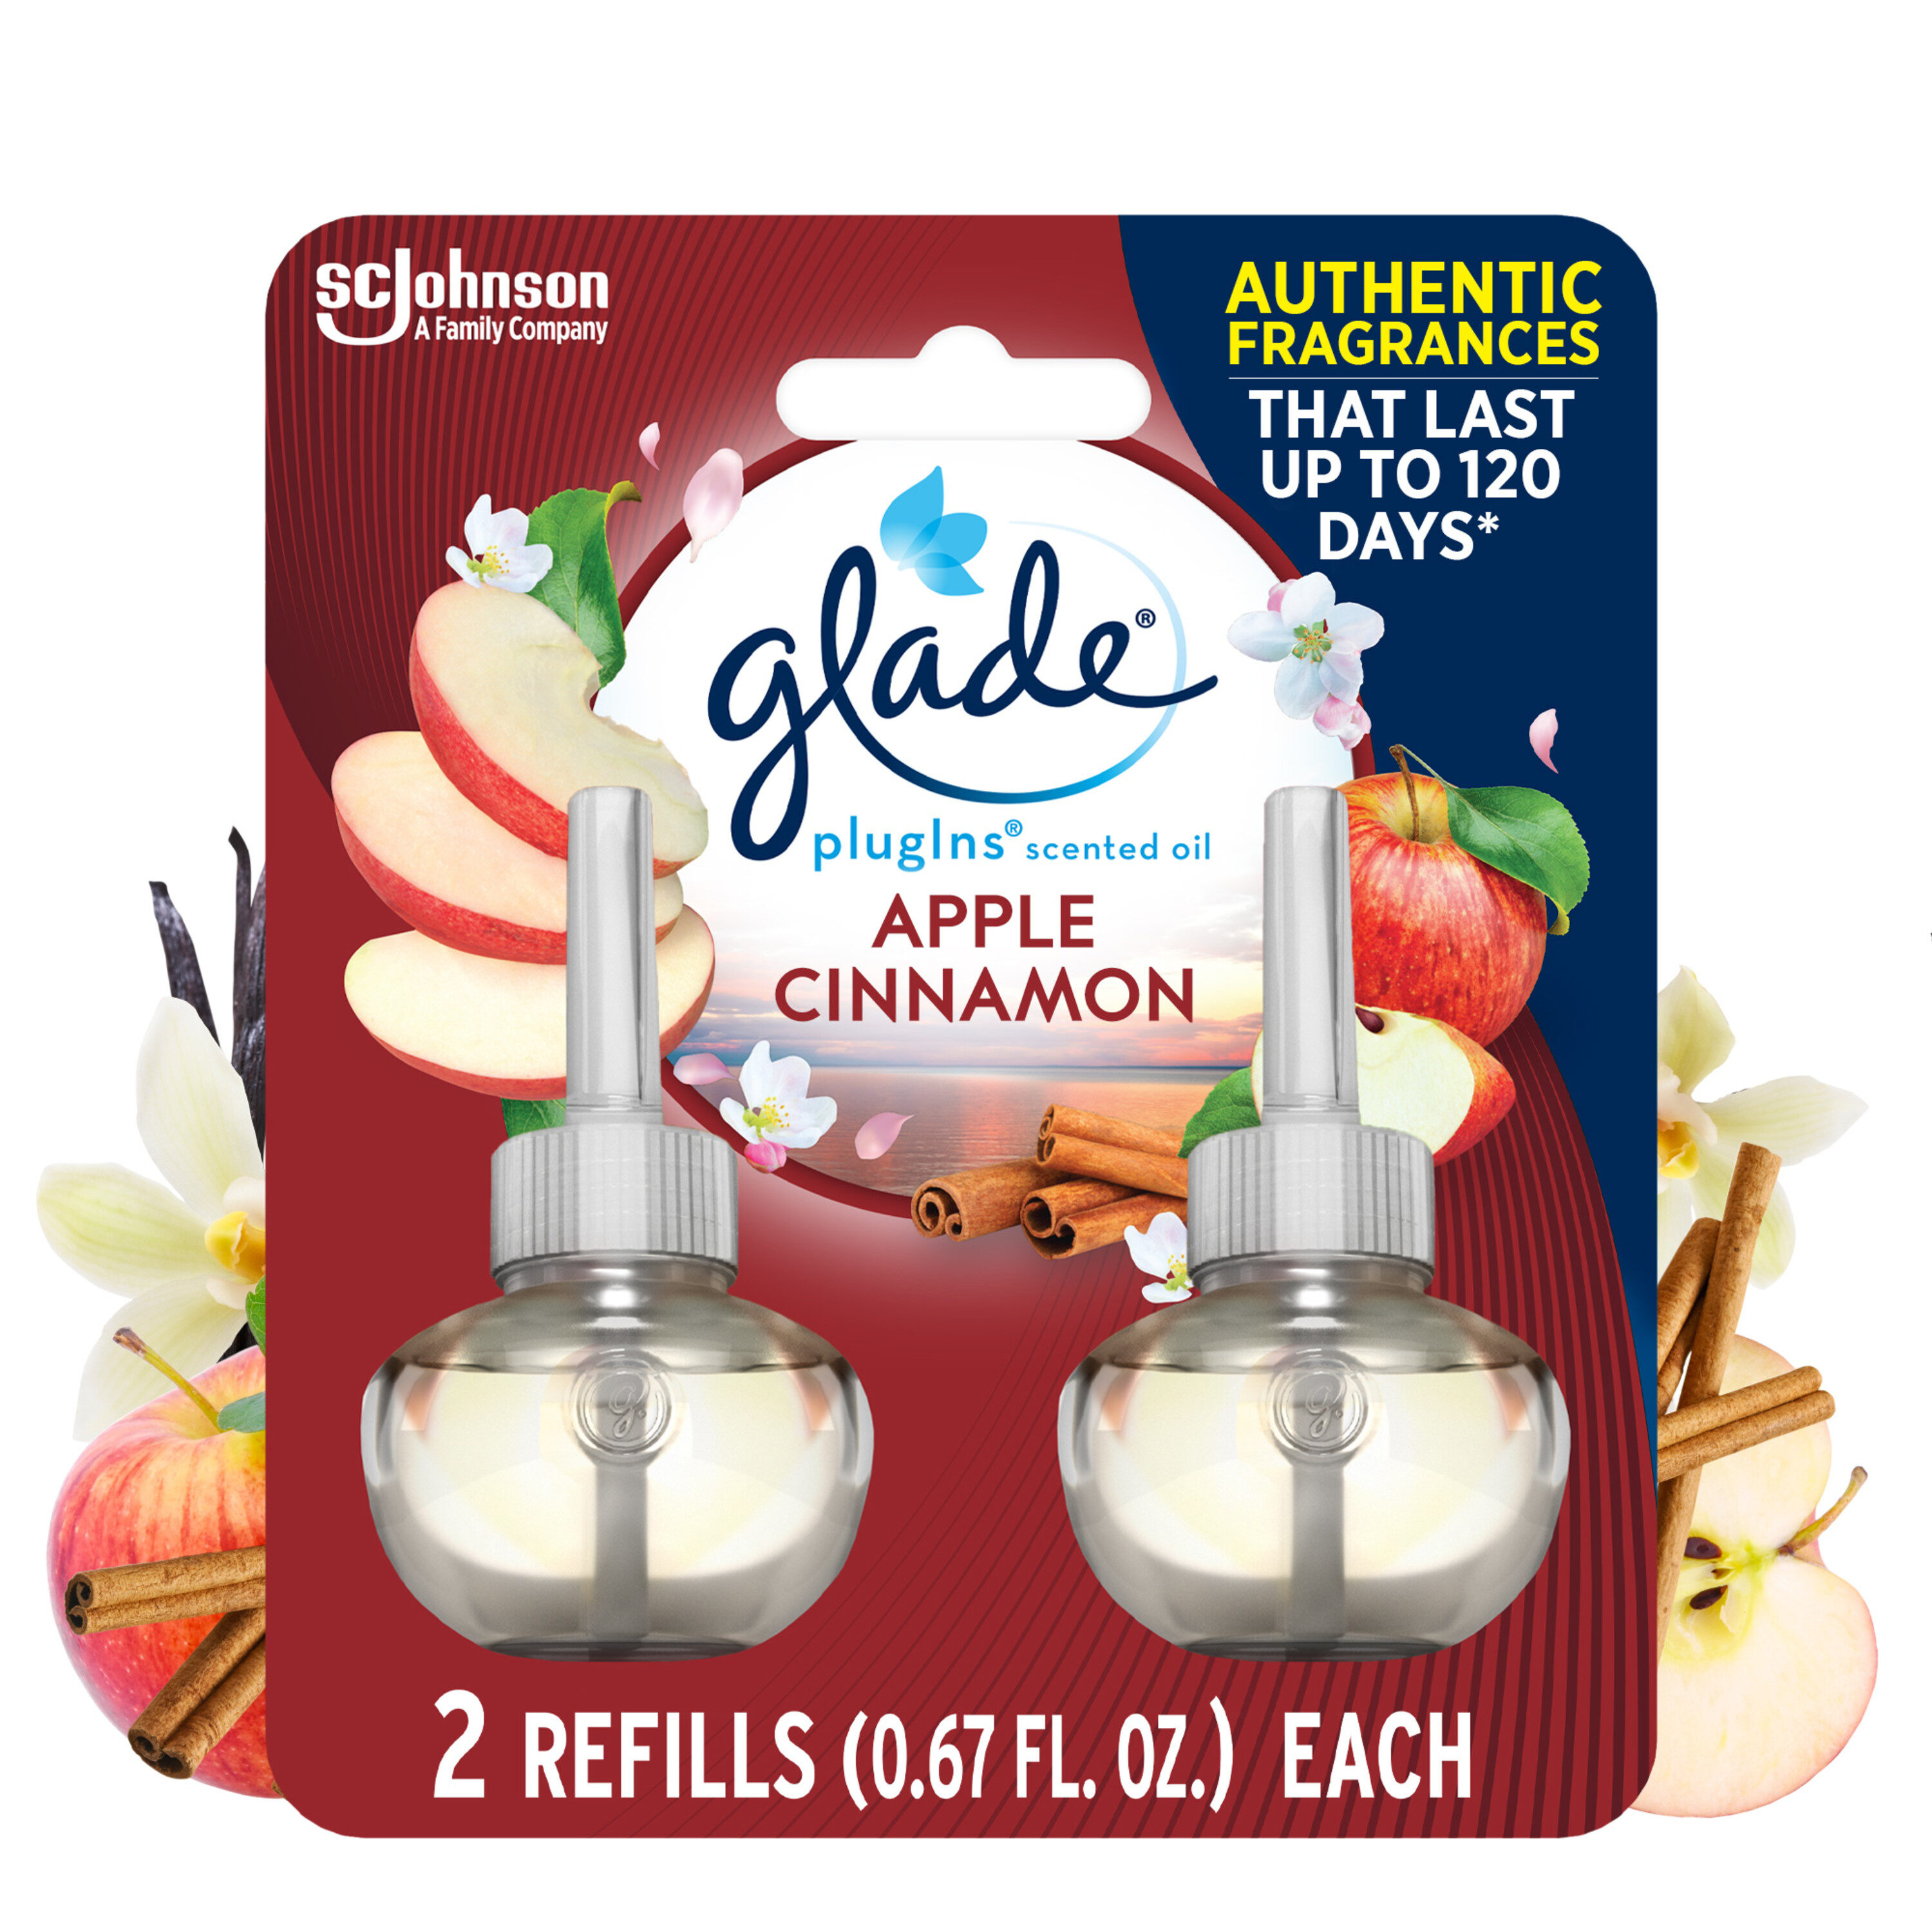 Glade PlugIns Scented Oil Air Freshener Refill, Apple Cinnamon, 3 refills, 2.01 fl oz